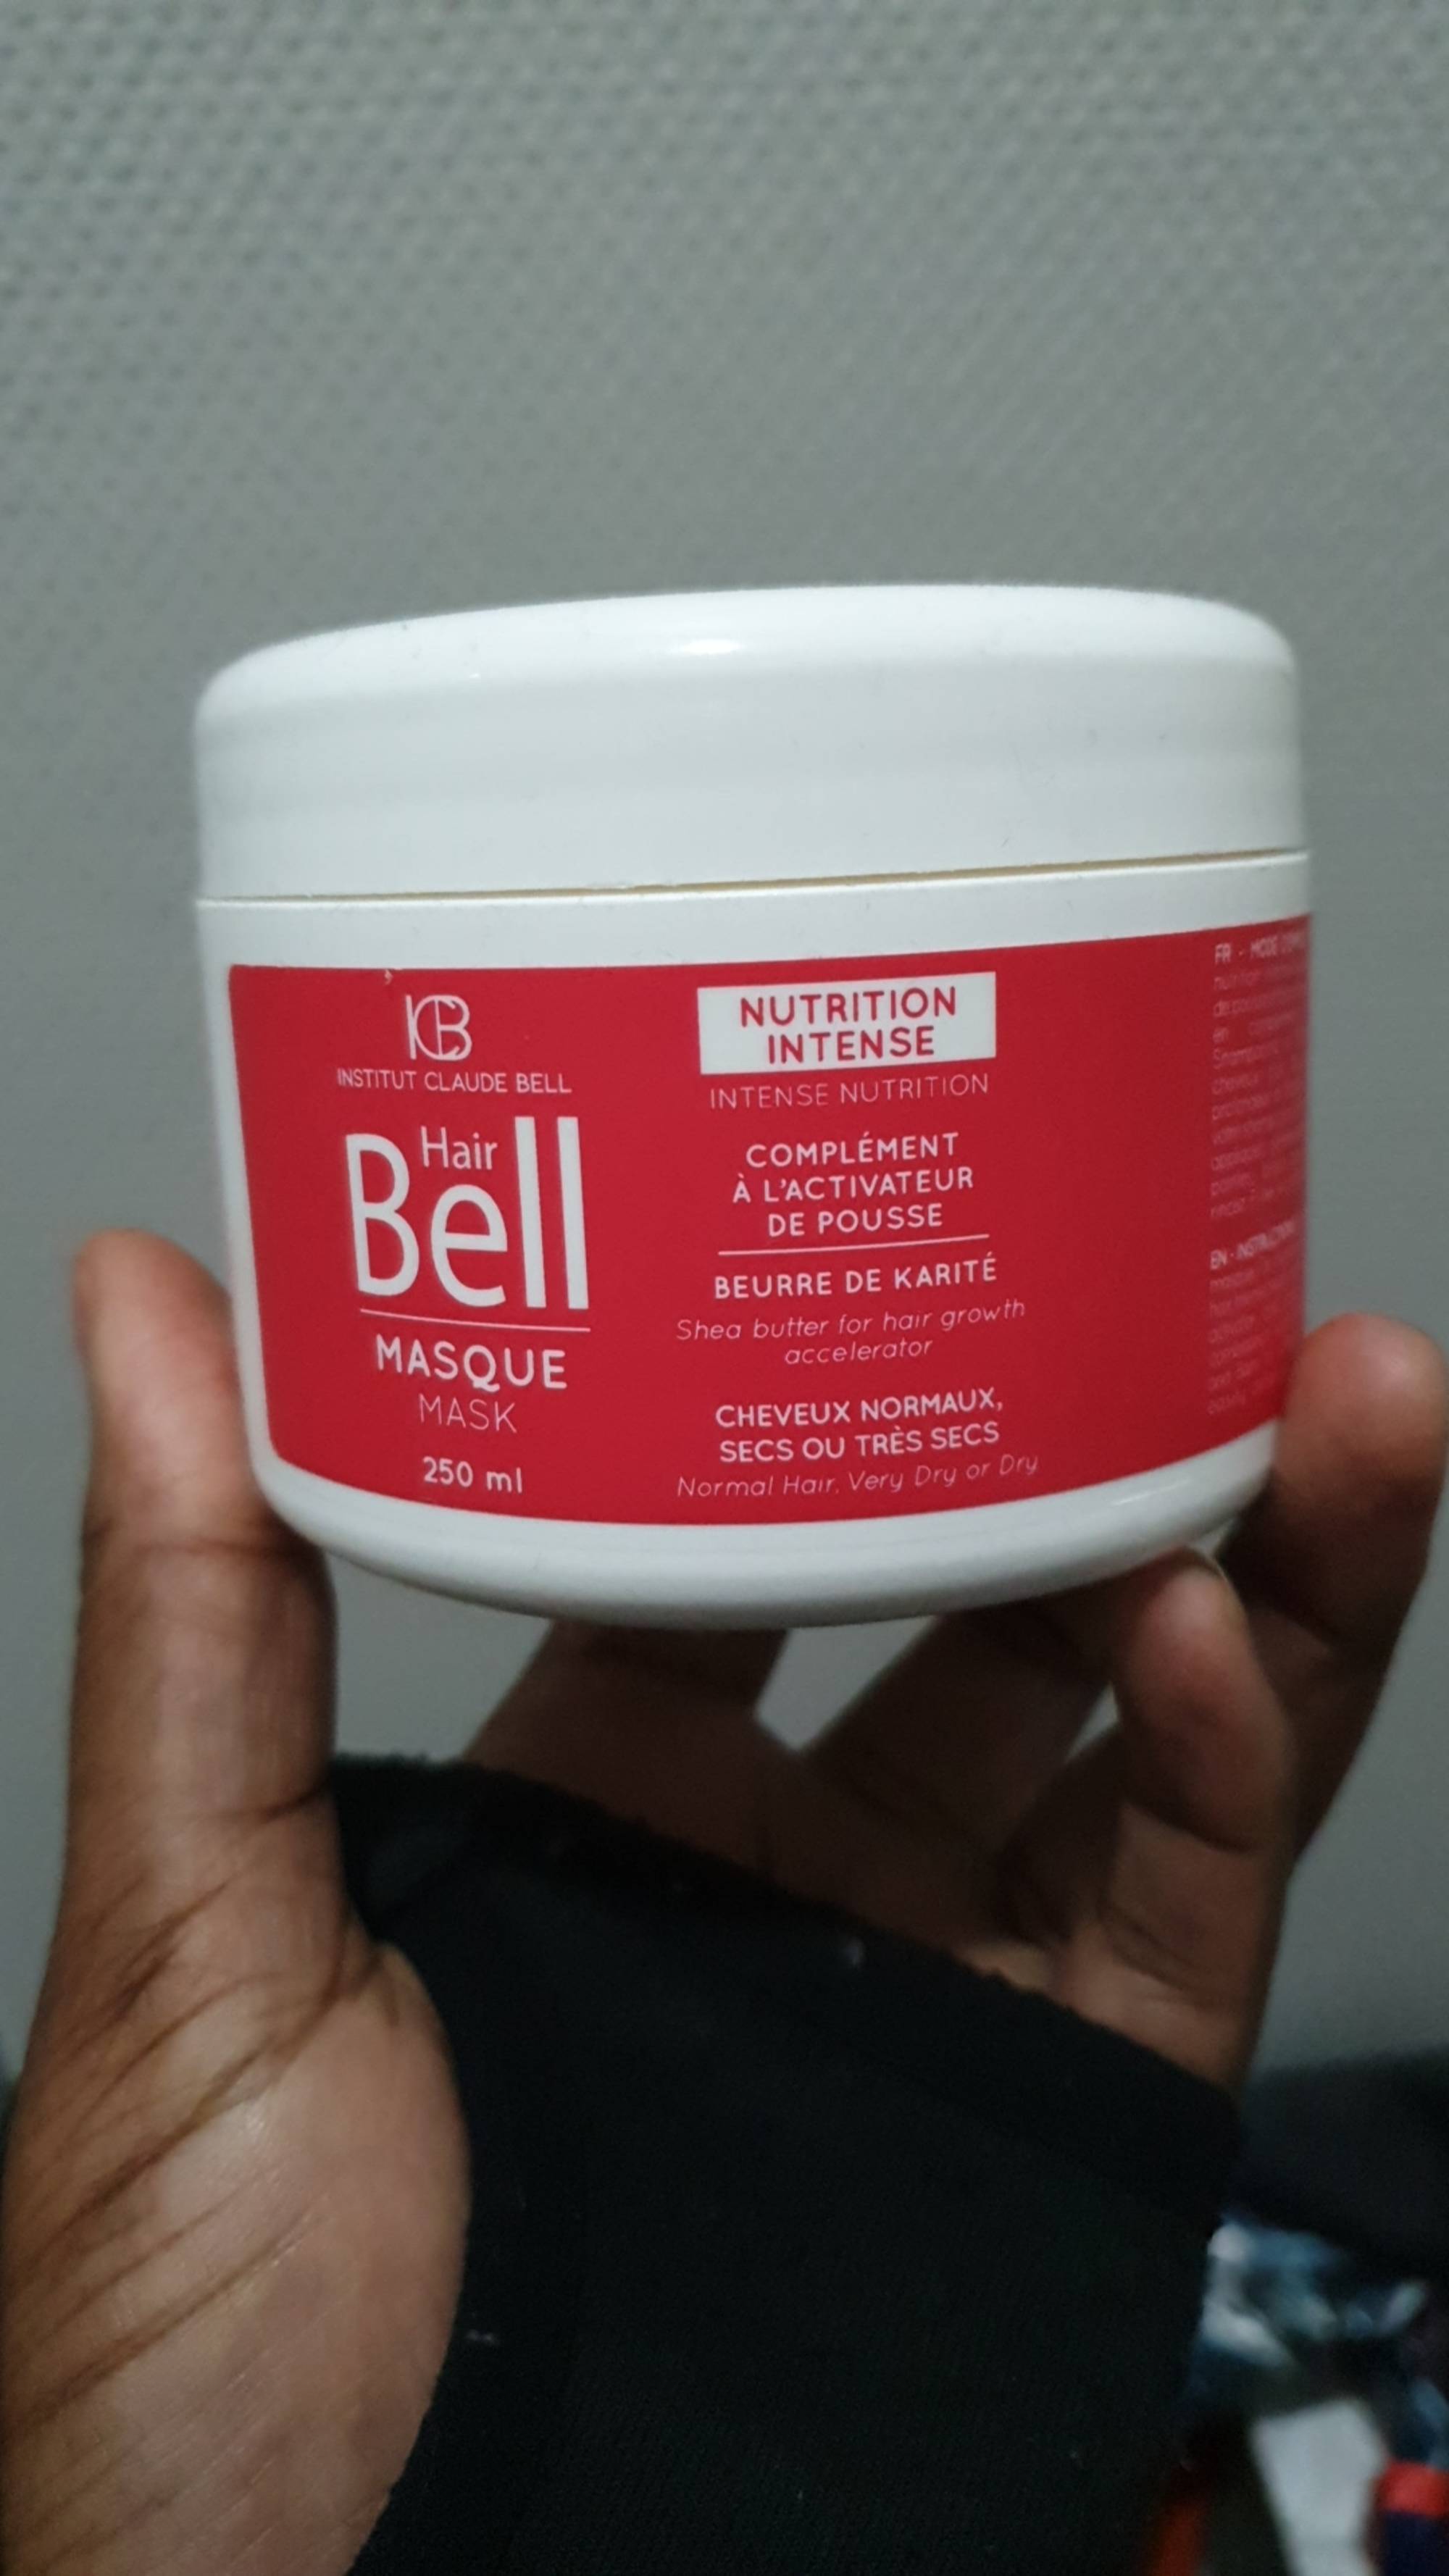 INSTITUT CLAUDE BELL - Hair bell - Masque - Nutrition intense 